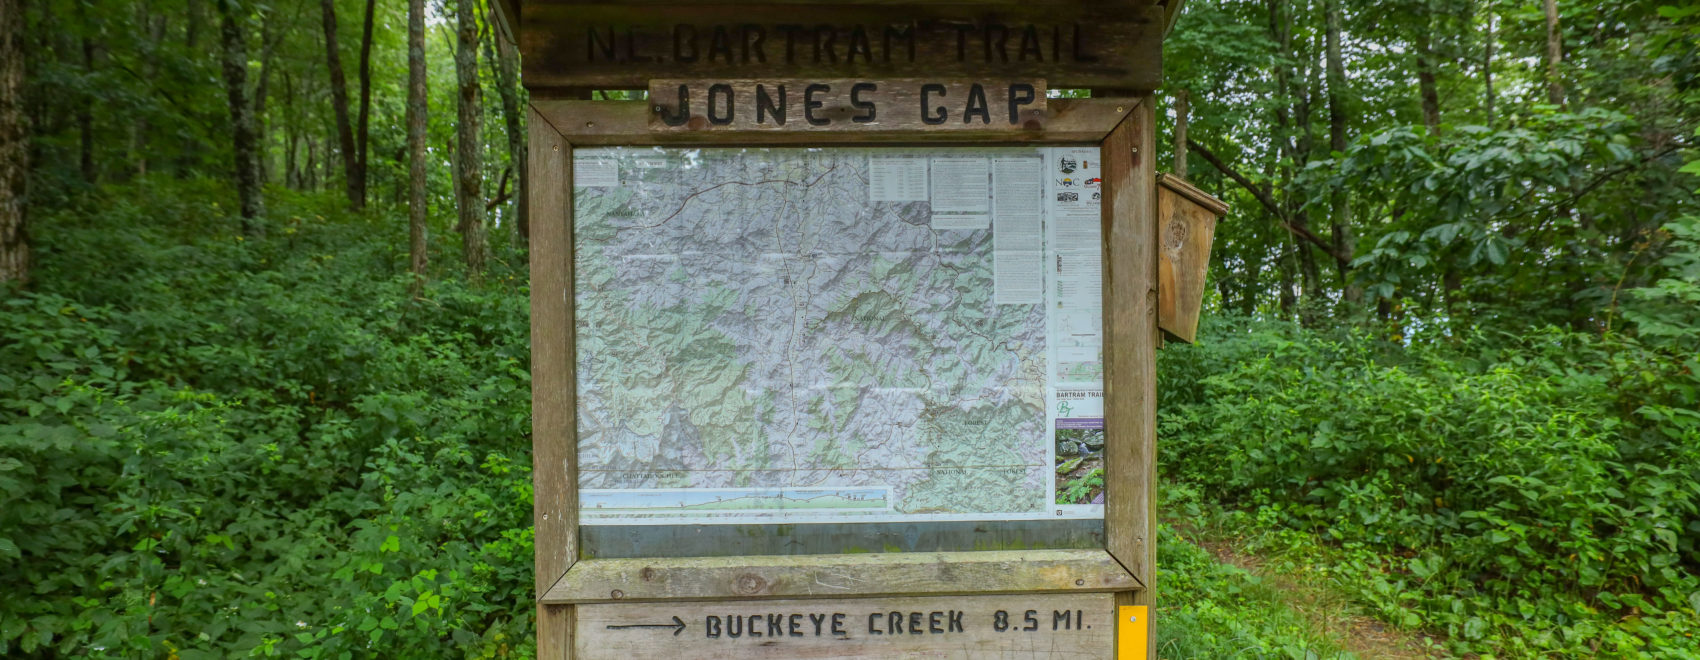 Jones Gap Trail Head Kiosk